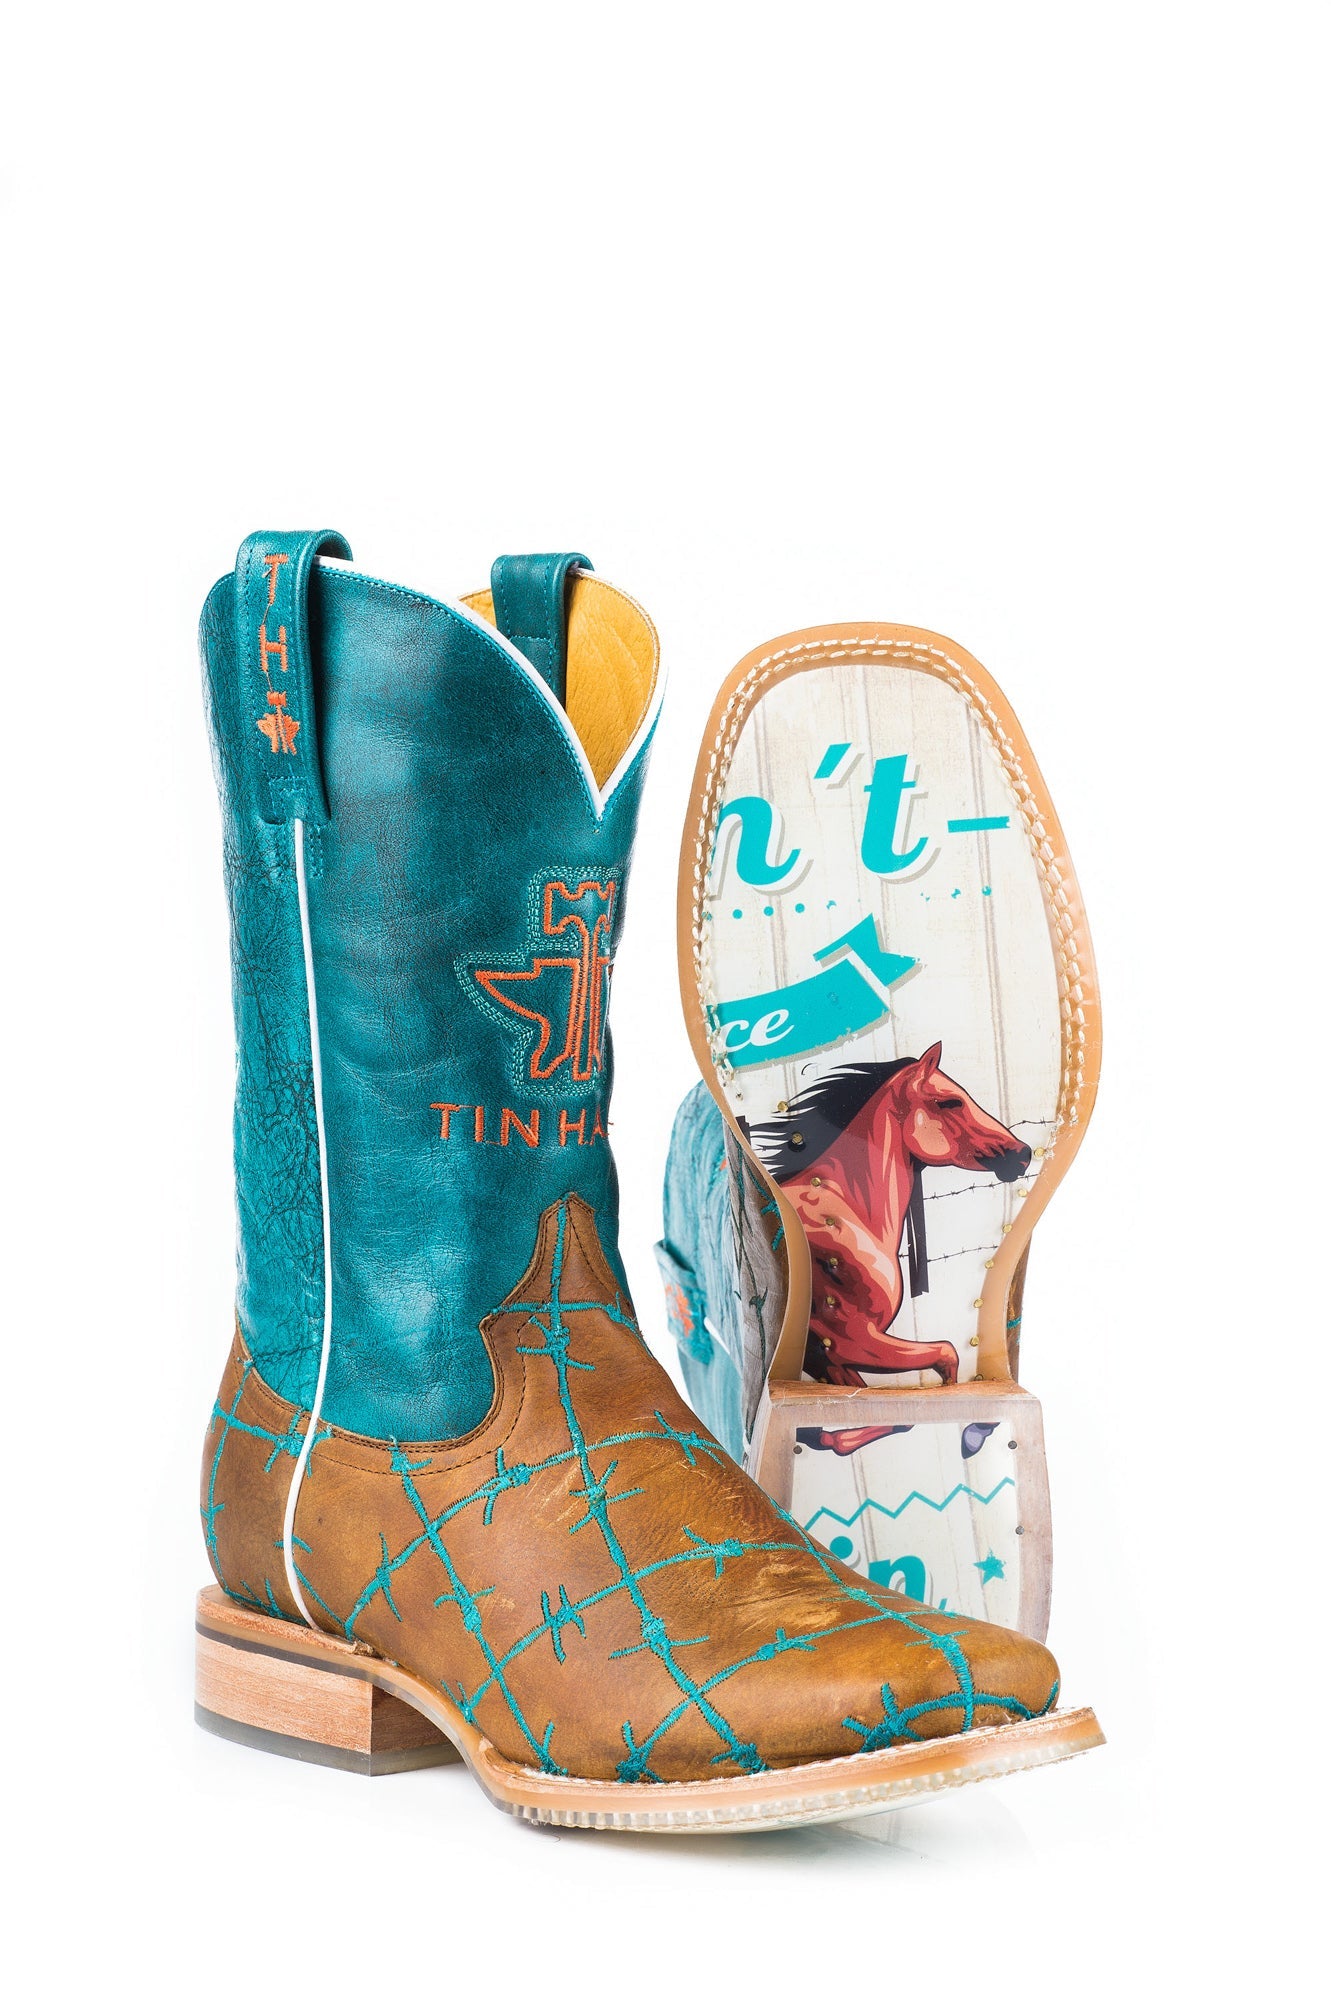 Tin Haul Boots Ladies Tan Leather Wild 